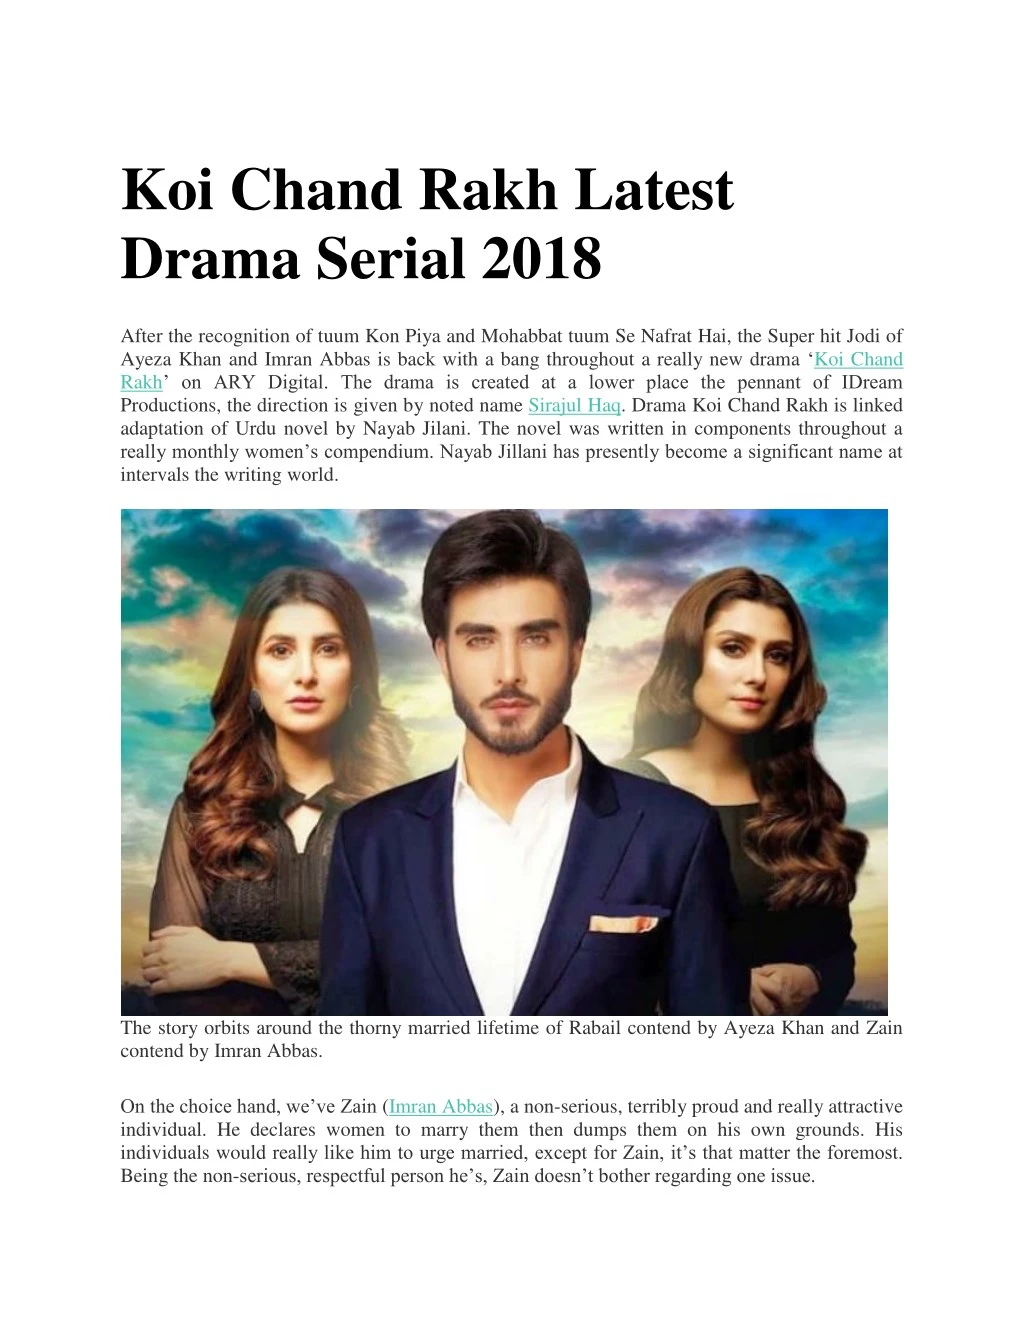 koi chand rakh latest drama serial 2018